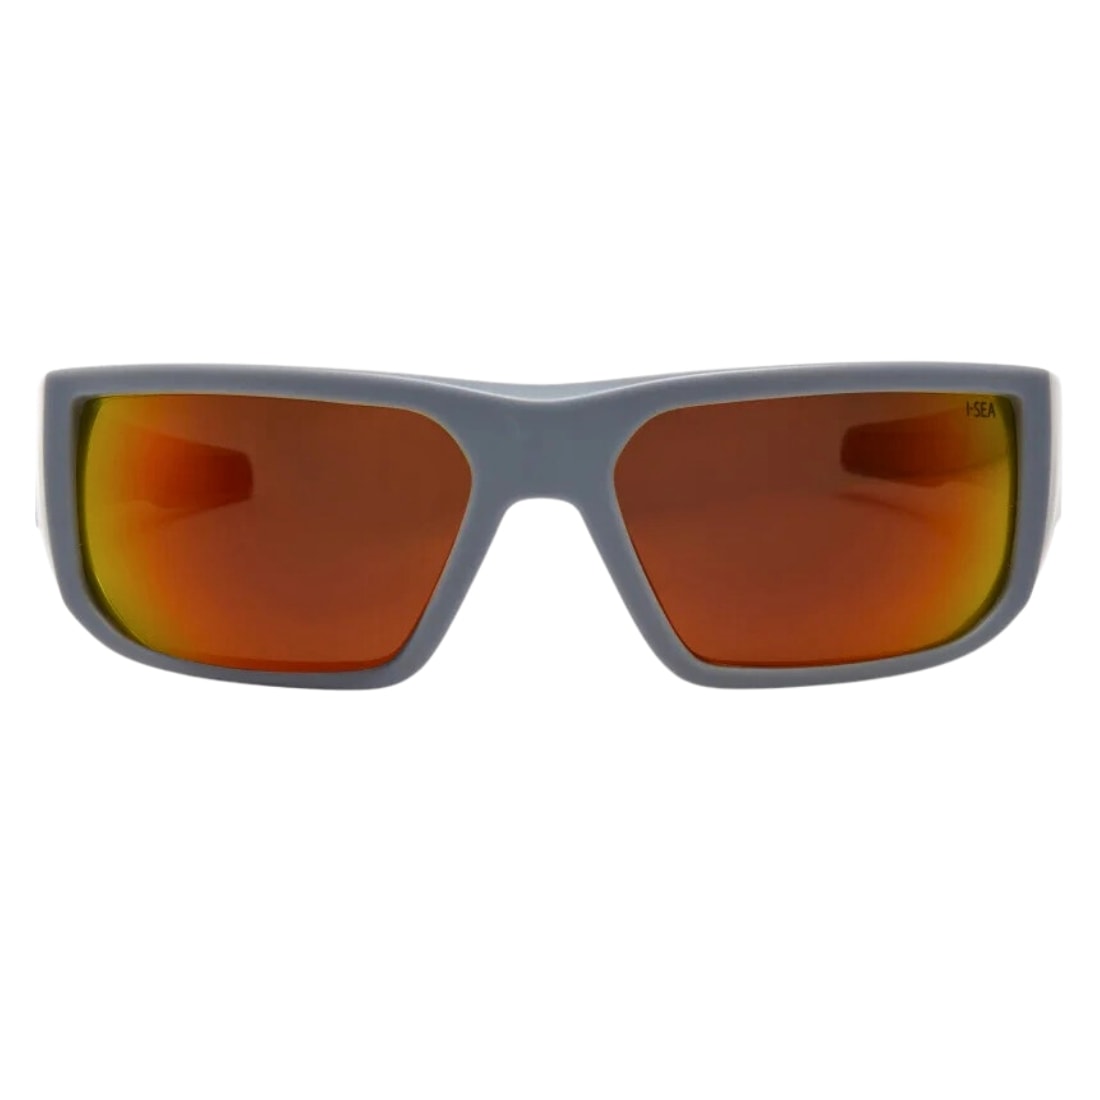 I-Sea Greyson Fletcher Wrap Around Polarised Sunglasses - Grey/Red Polarized Lens - Wrap Around Sunglasses by I-Sea